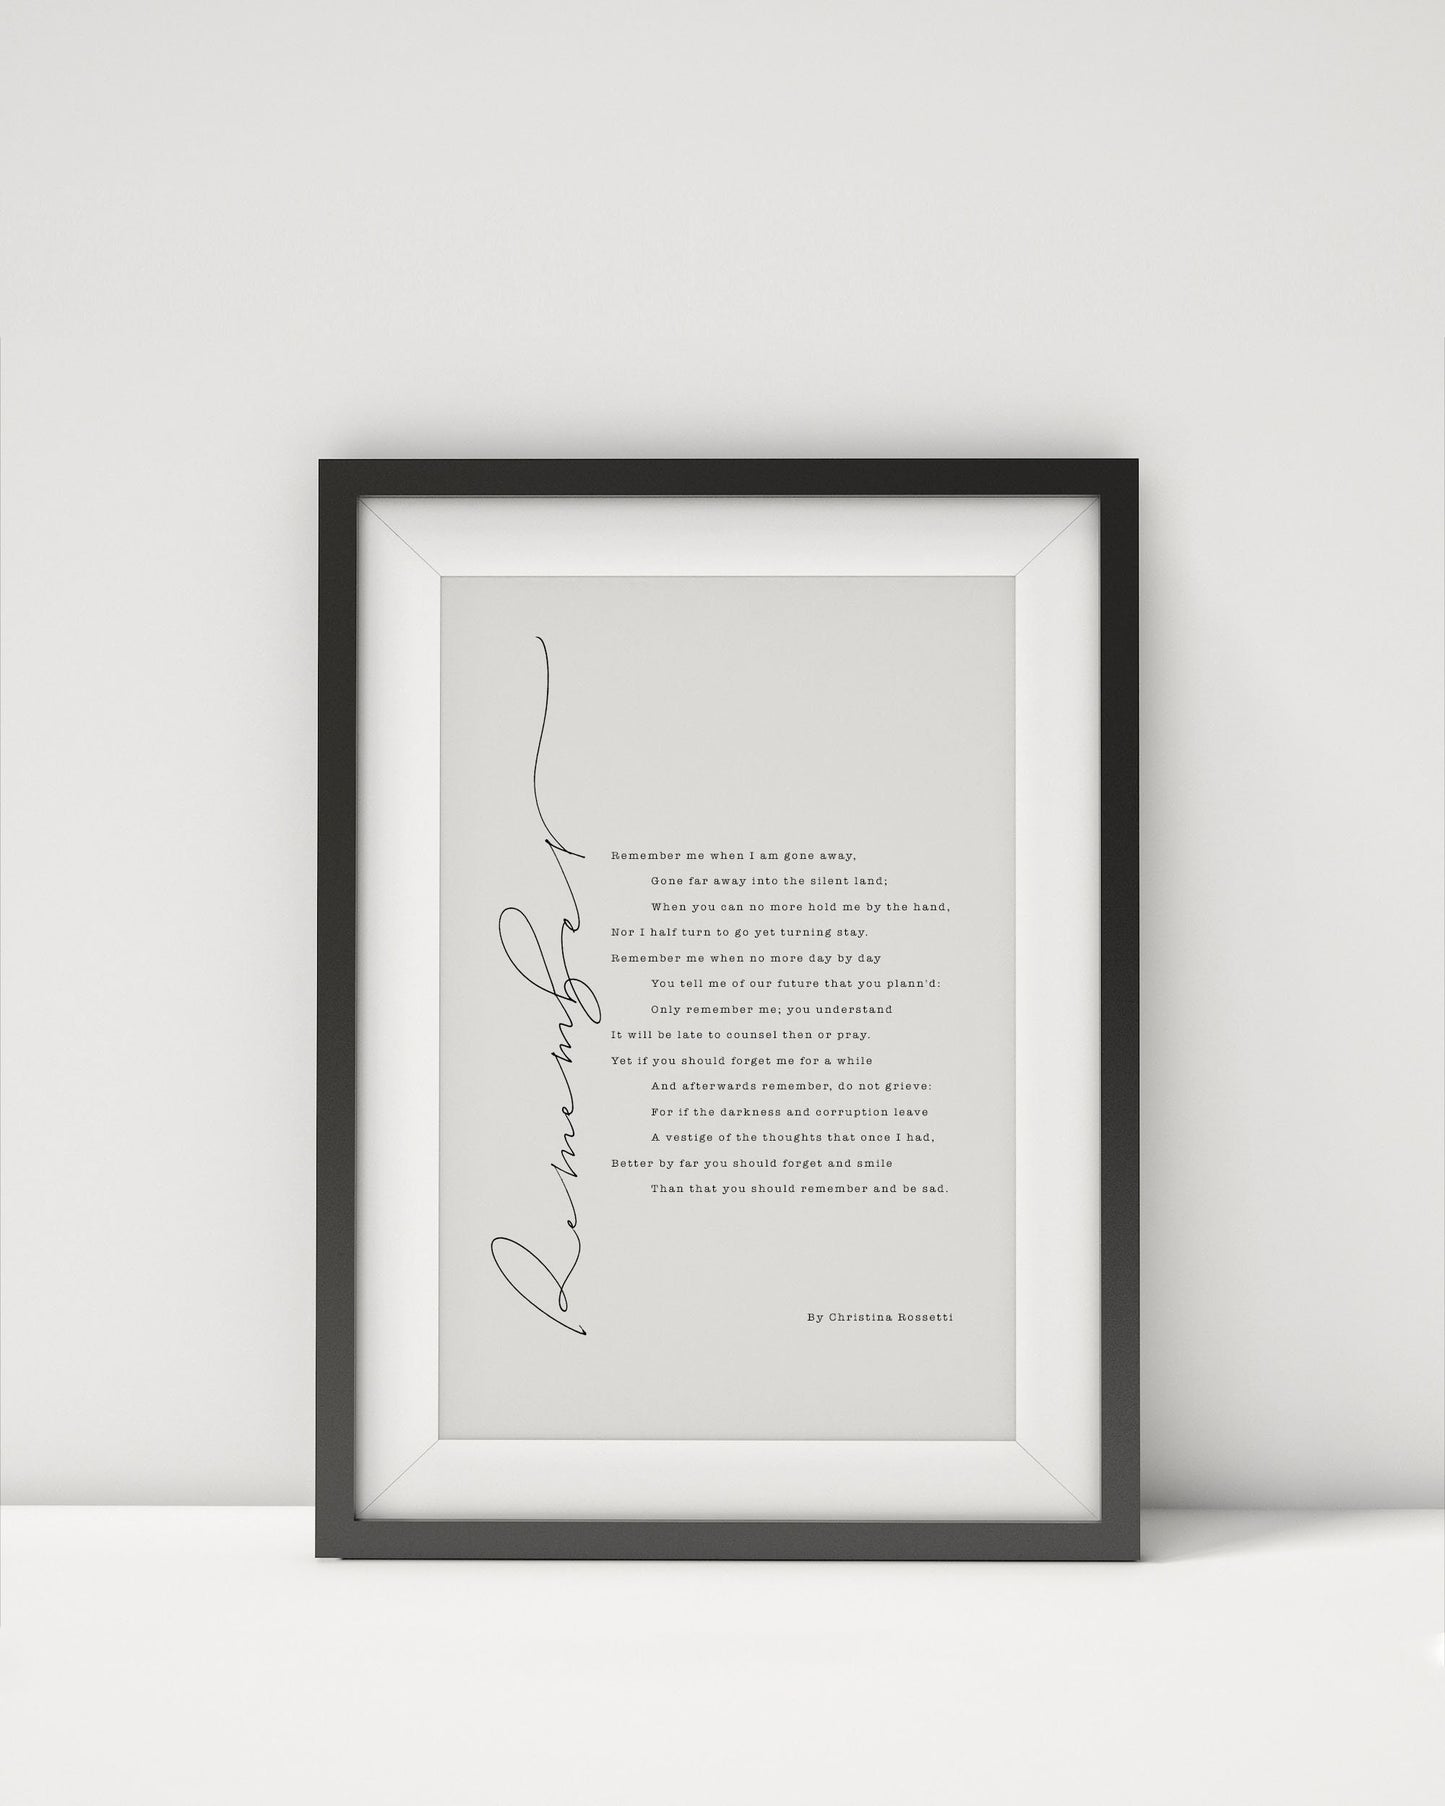 Remember Me Poem by Christina Rossetti - Bereavement Gifts - Bereavement Card - Memorial Gift - Funeral reading - Remember me print framed